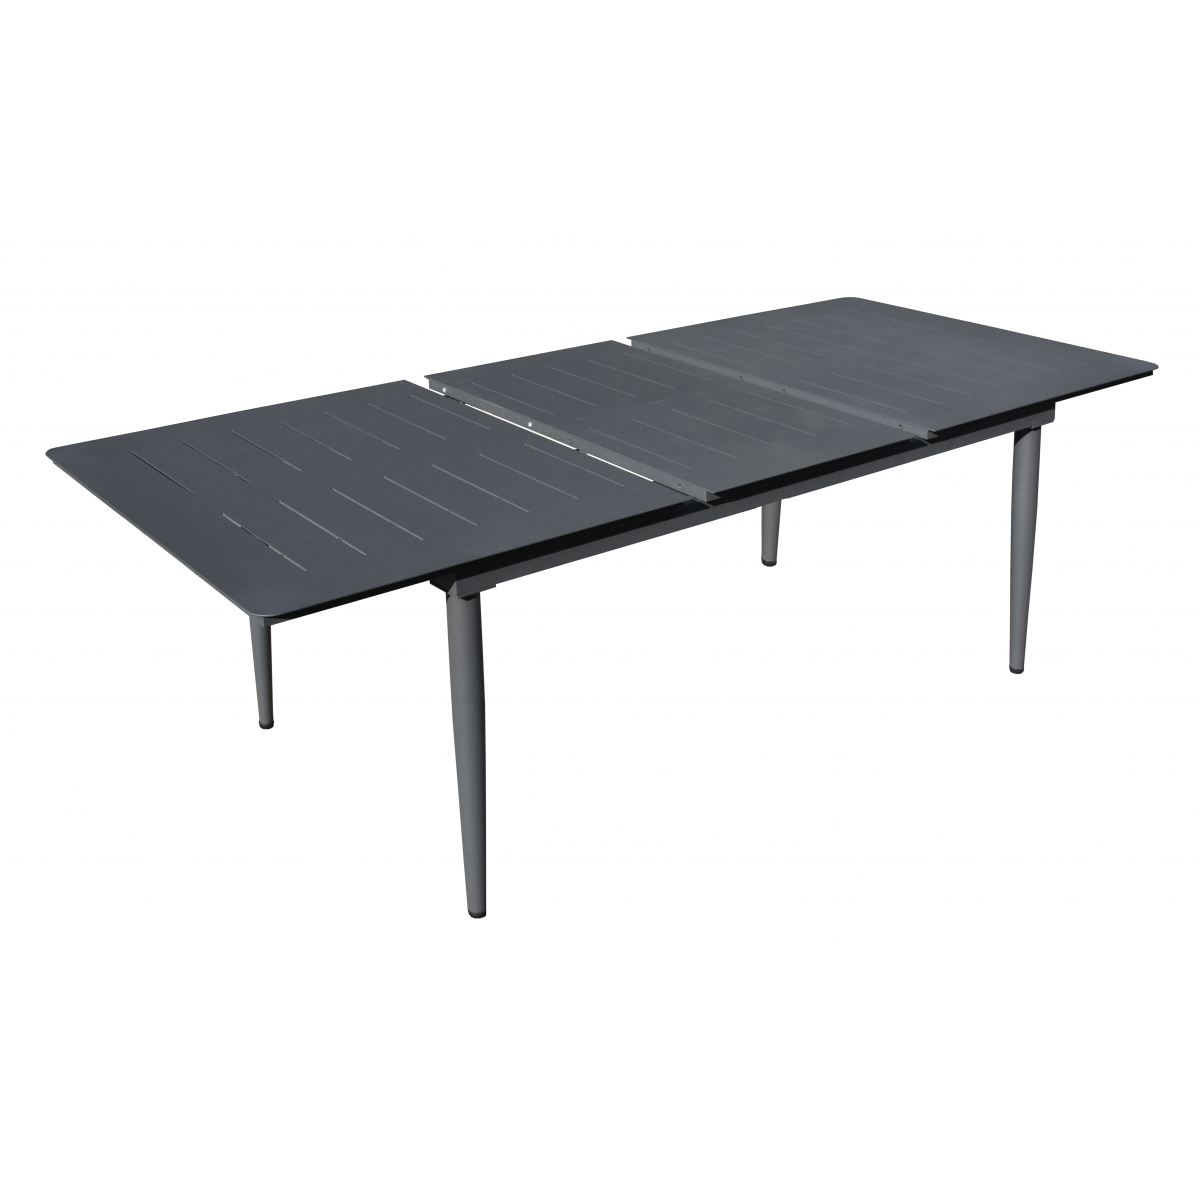 Table de jardin extensible en aluminium coloris noir Carlina -160